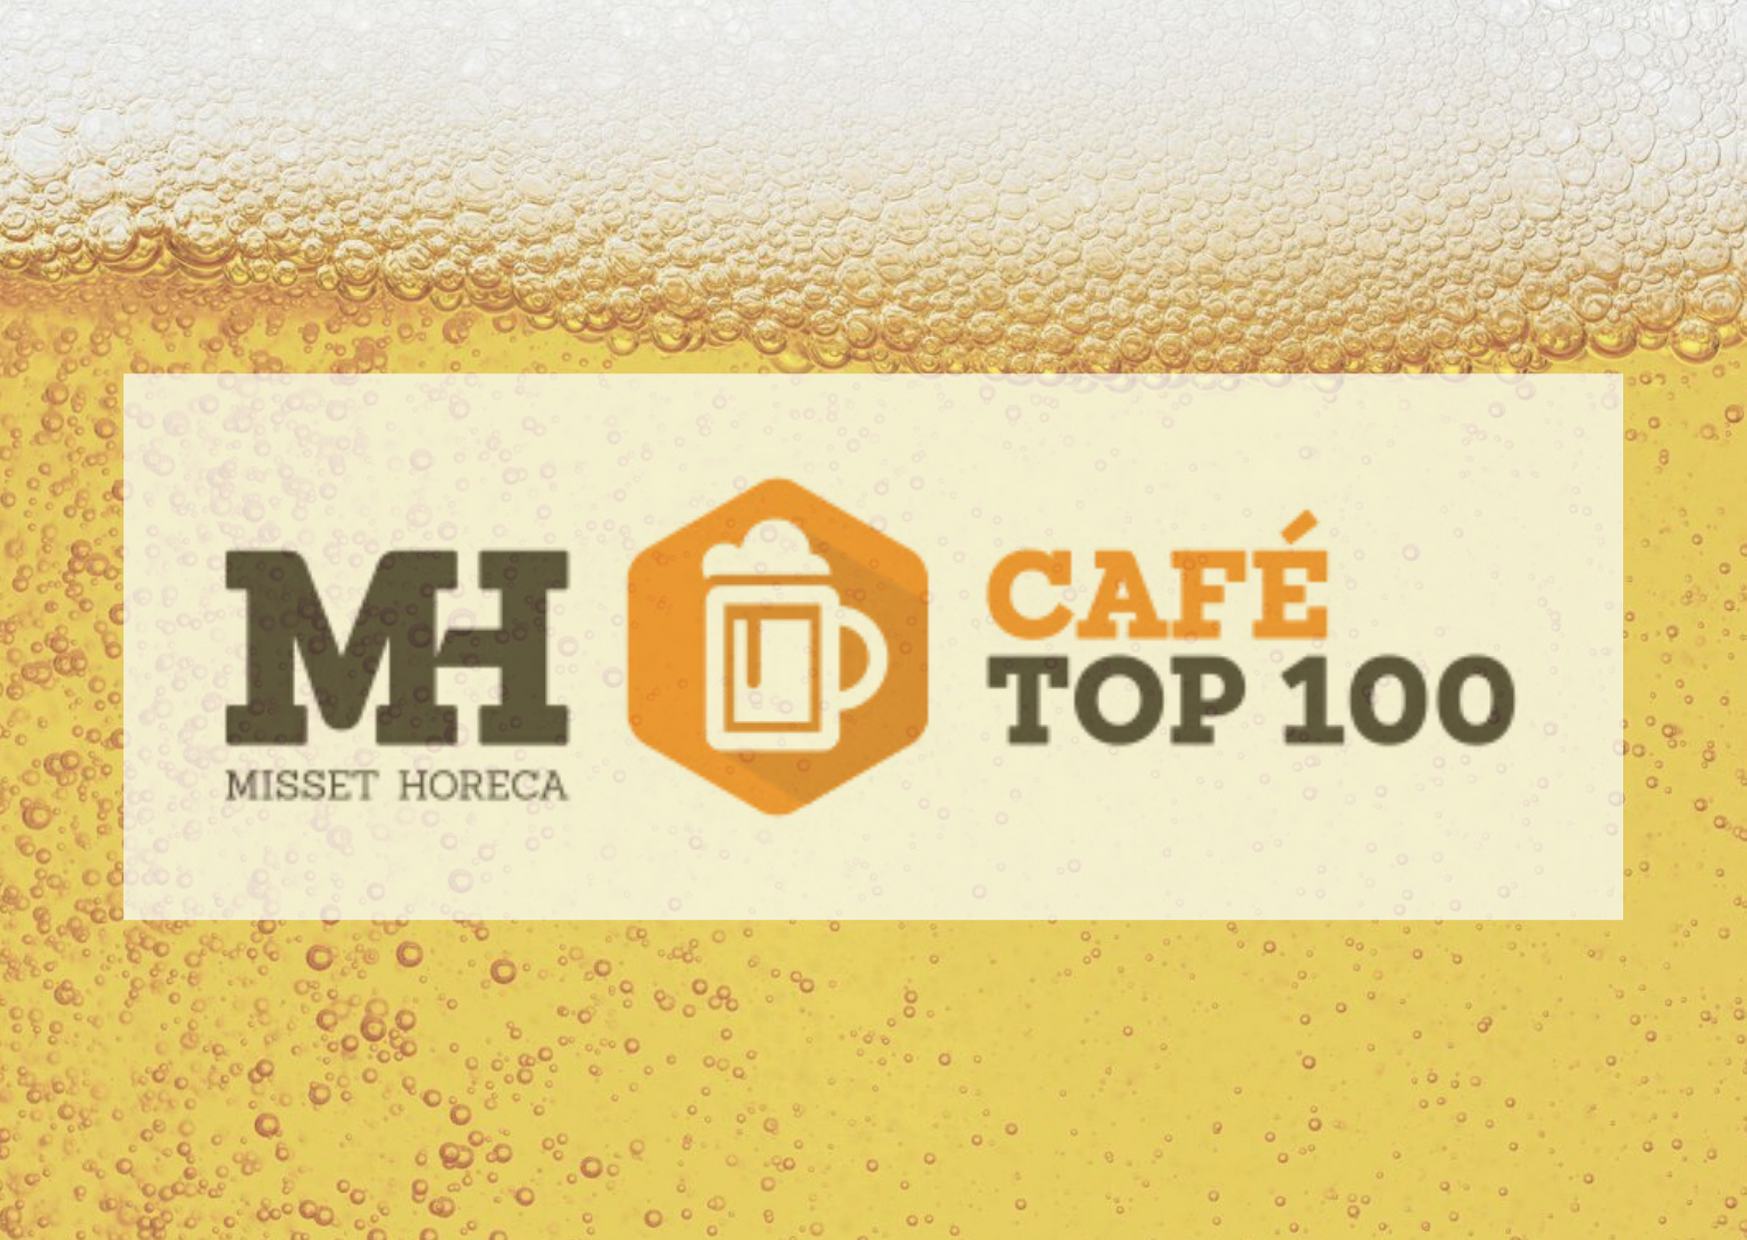 Vakmedianet stopt met Café Top 100